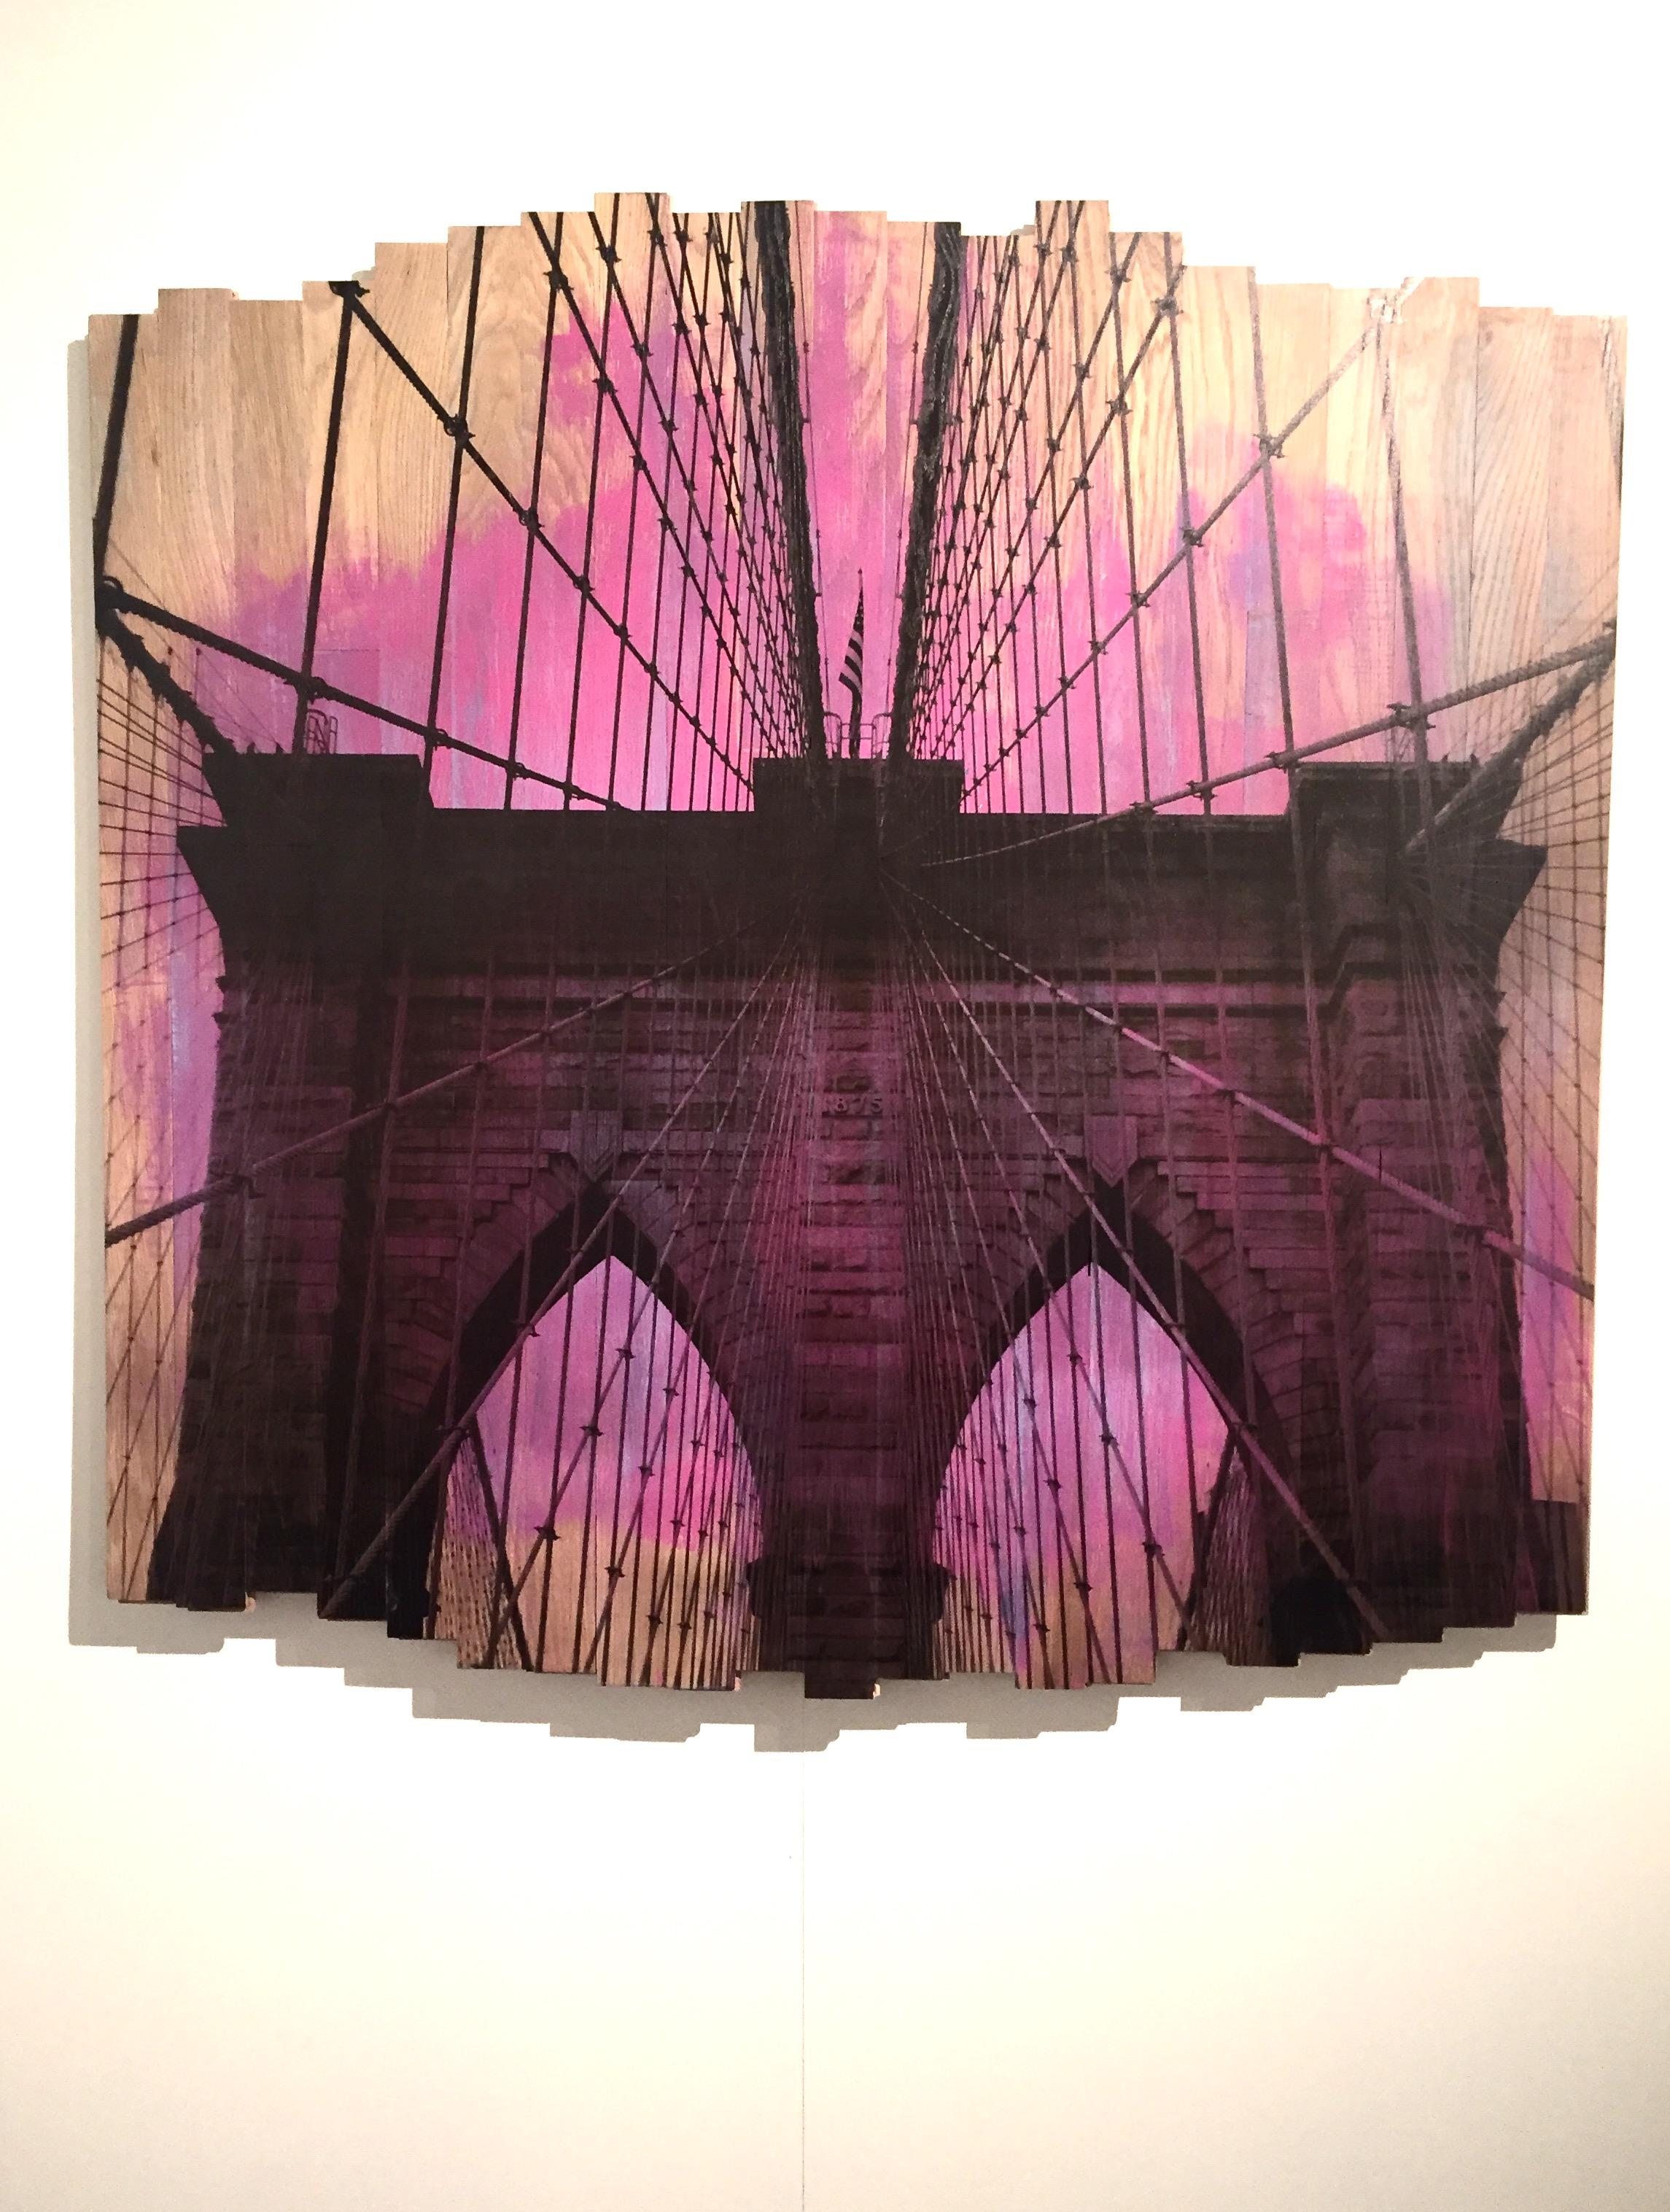 Brooklyn Bridge IV, Sunset Magenta, mixed media photography on wood - Photograph by Hugo Garcia-Urrutia